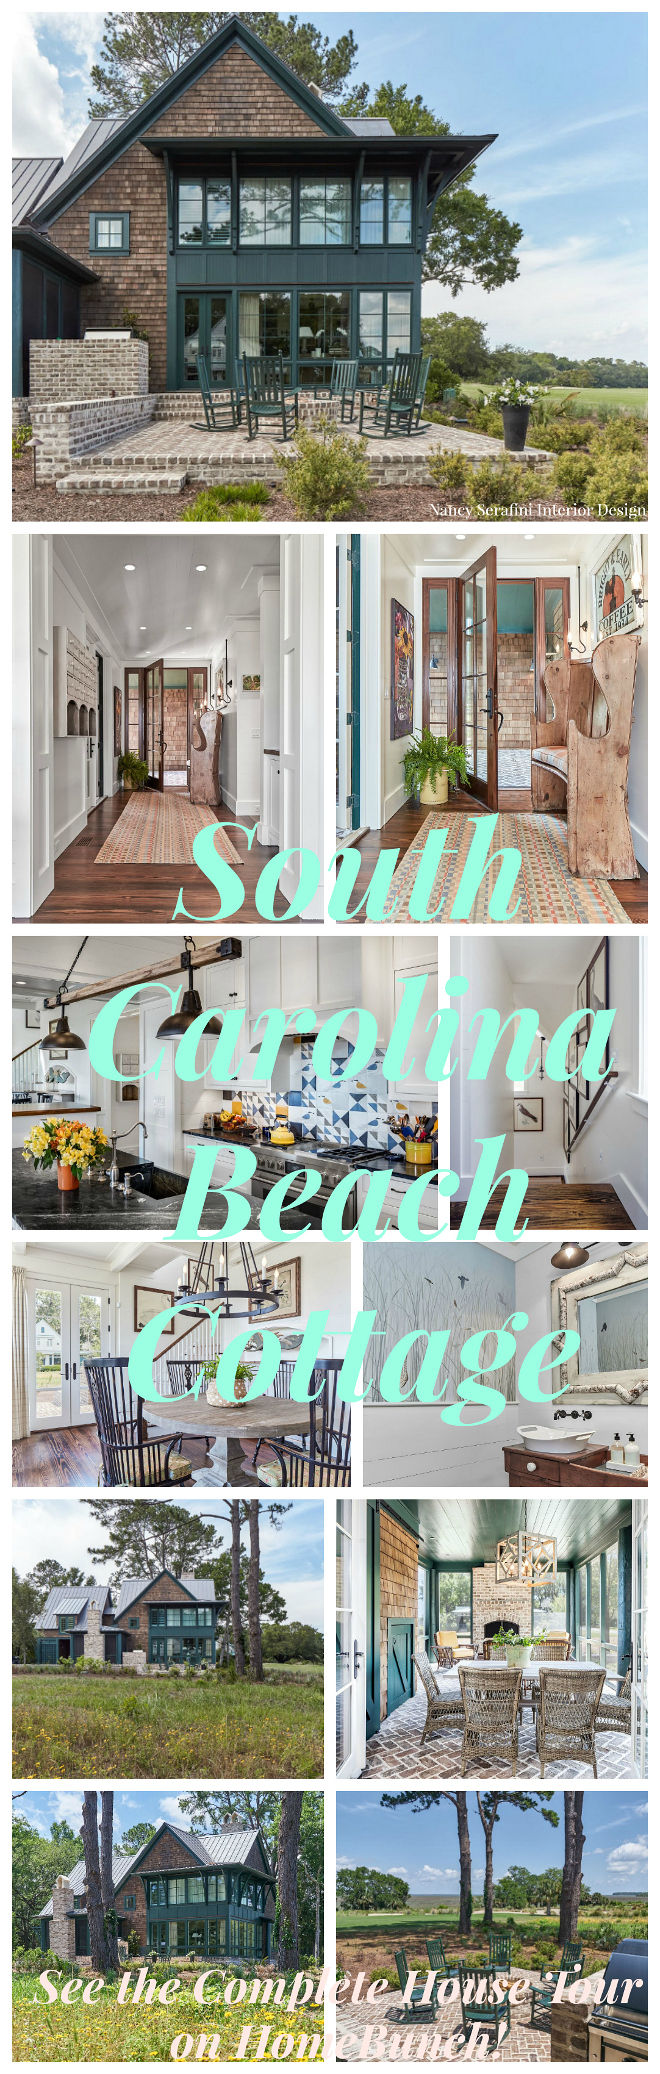 South Carolina Beach Cottage Design. 